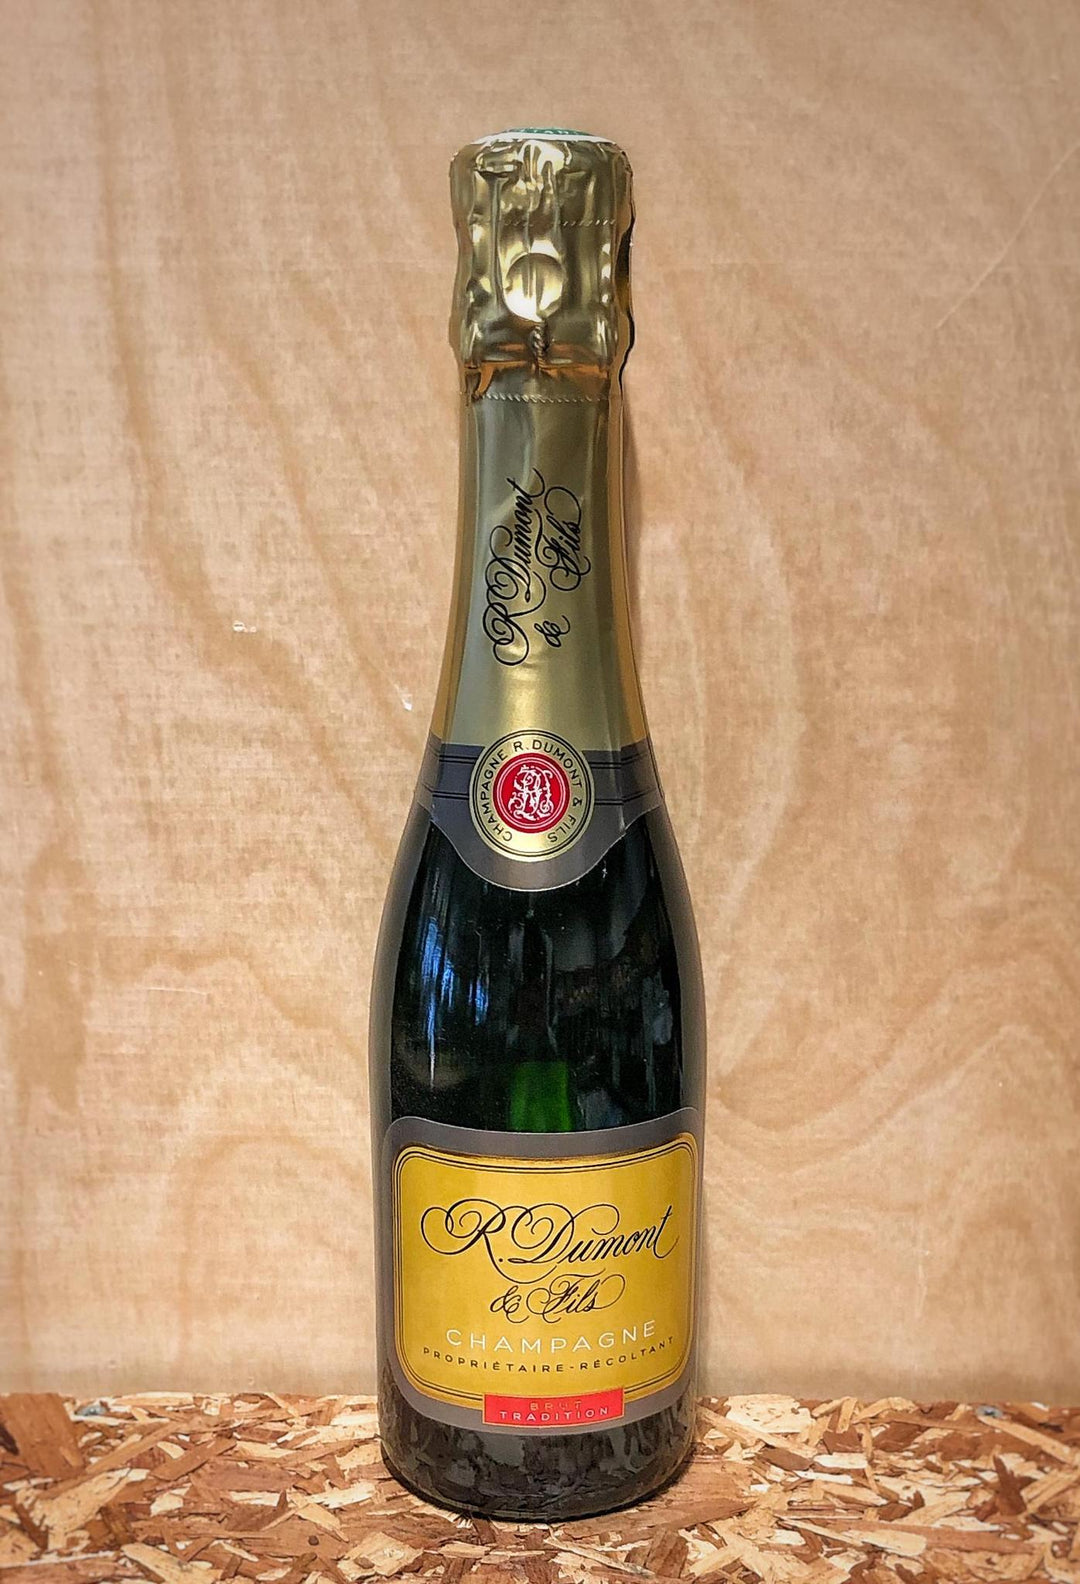 R. Dumont Brut Tradition NV 375ml (Champagne, France)